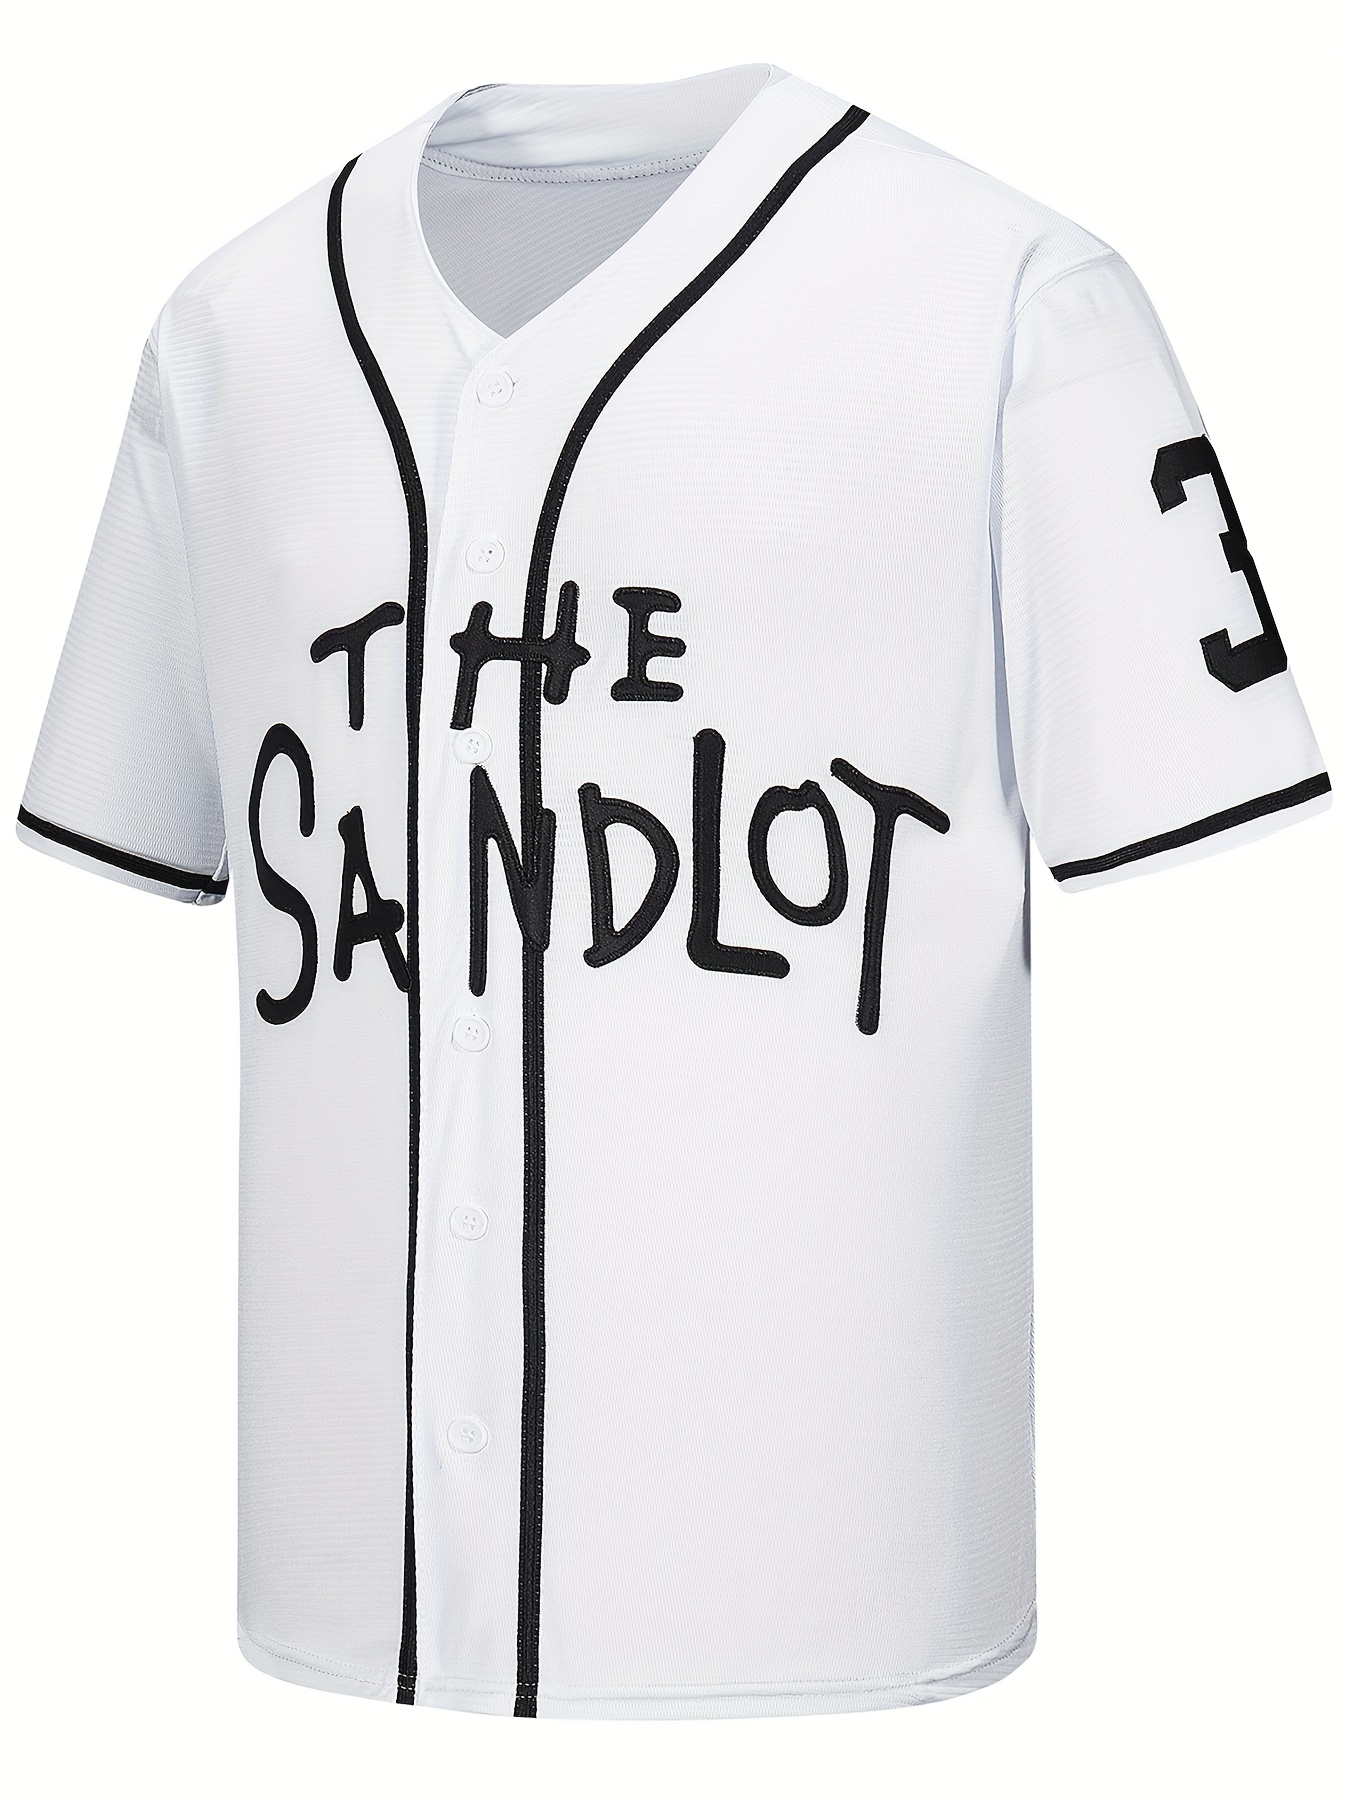 Men's Solid Color Classic Design Baseball Jersey, The Sandlot